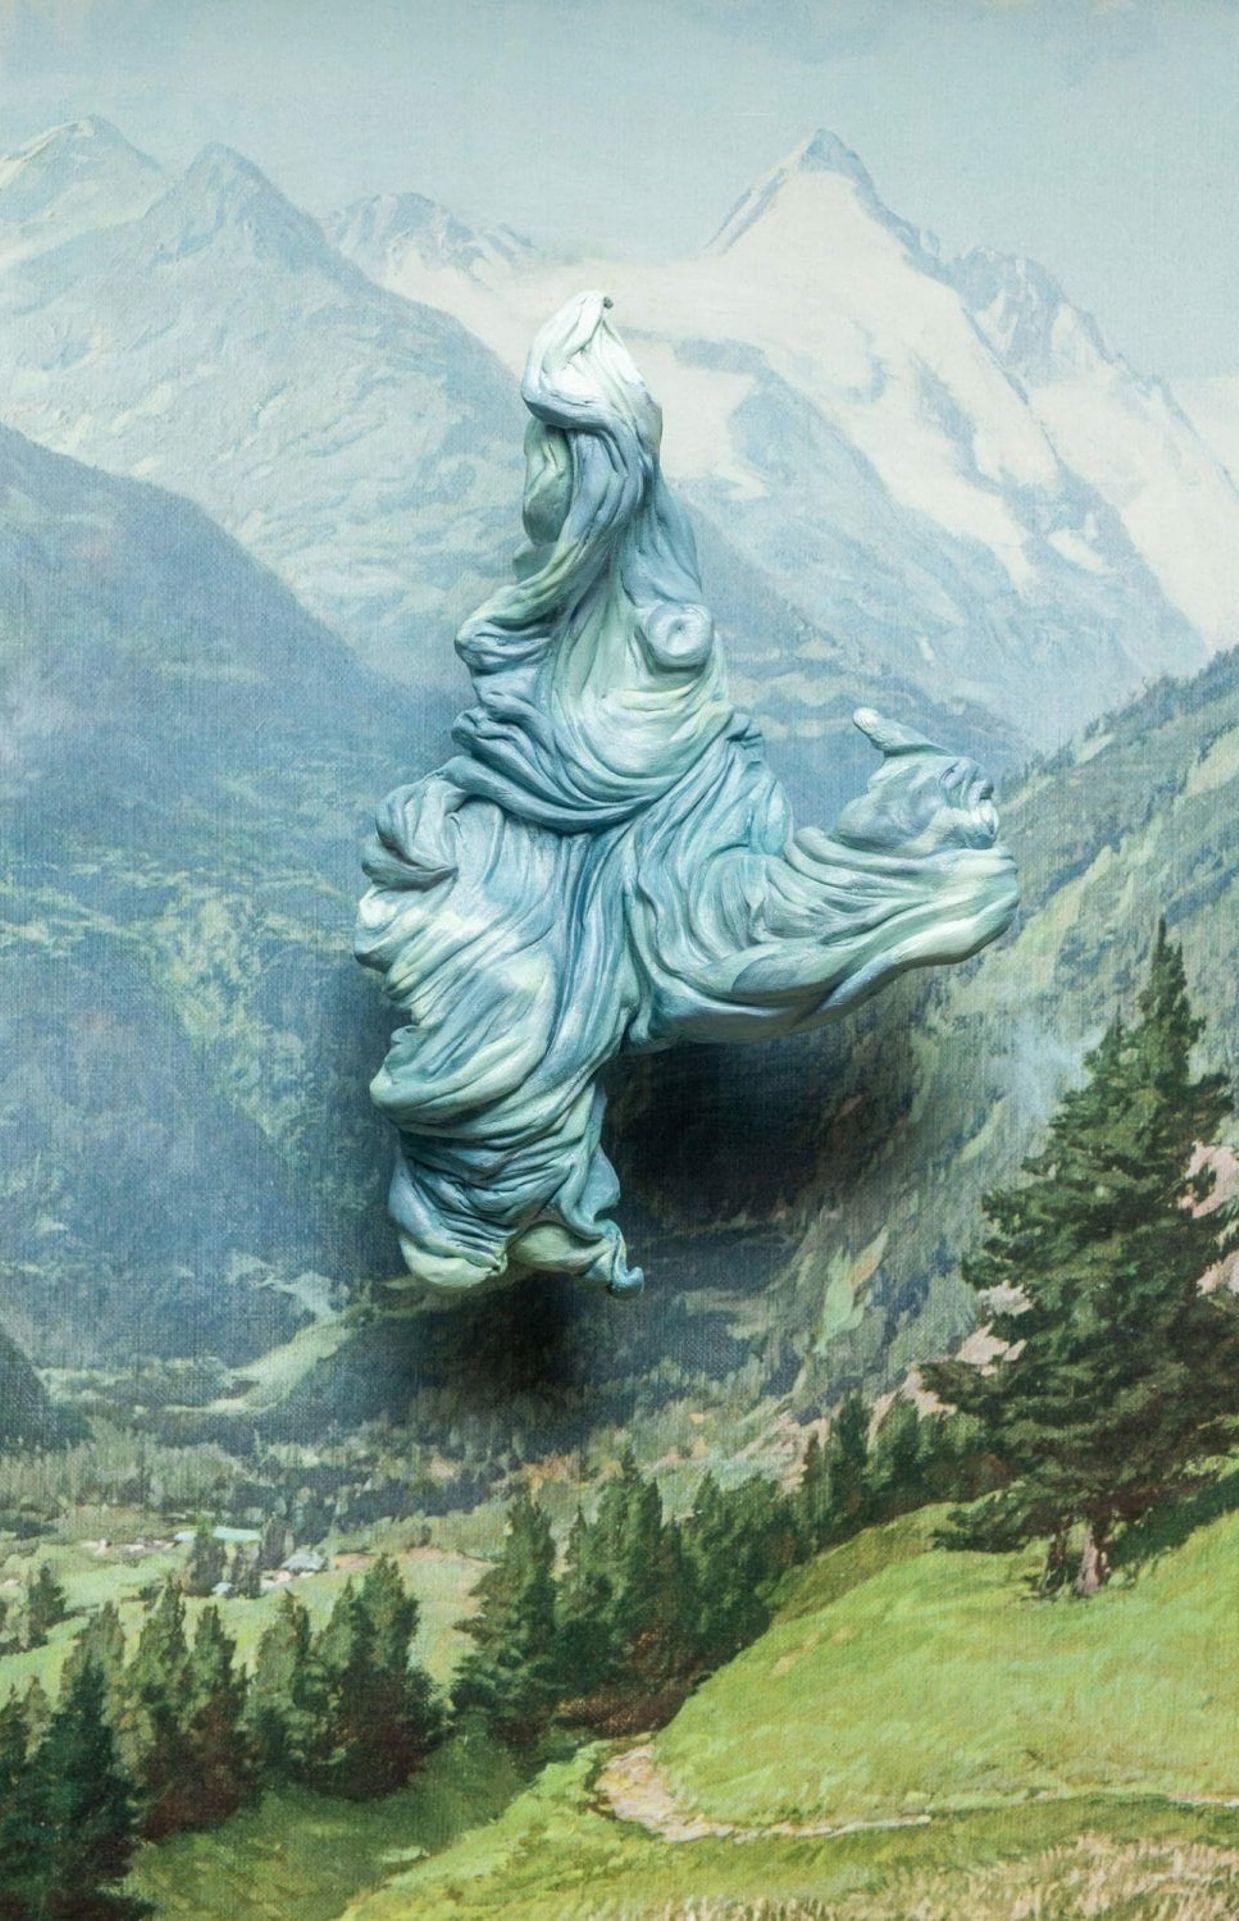 Stephan Balleux, R PATT (the mountain), 2020, mixed media on found frame